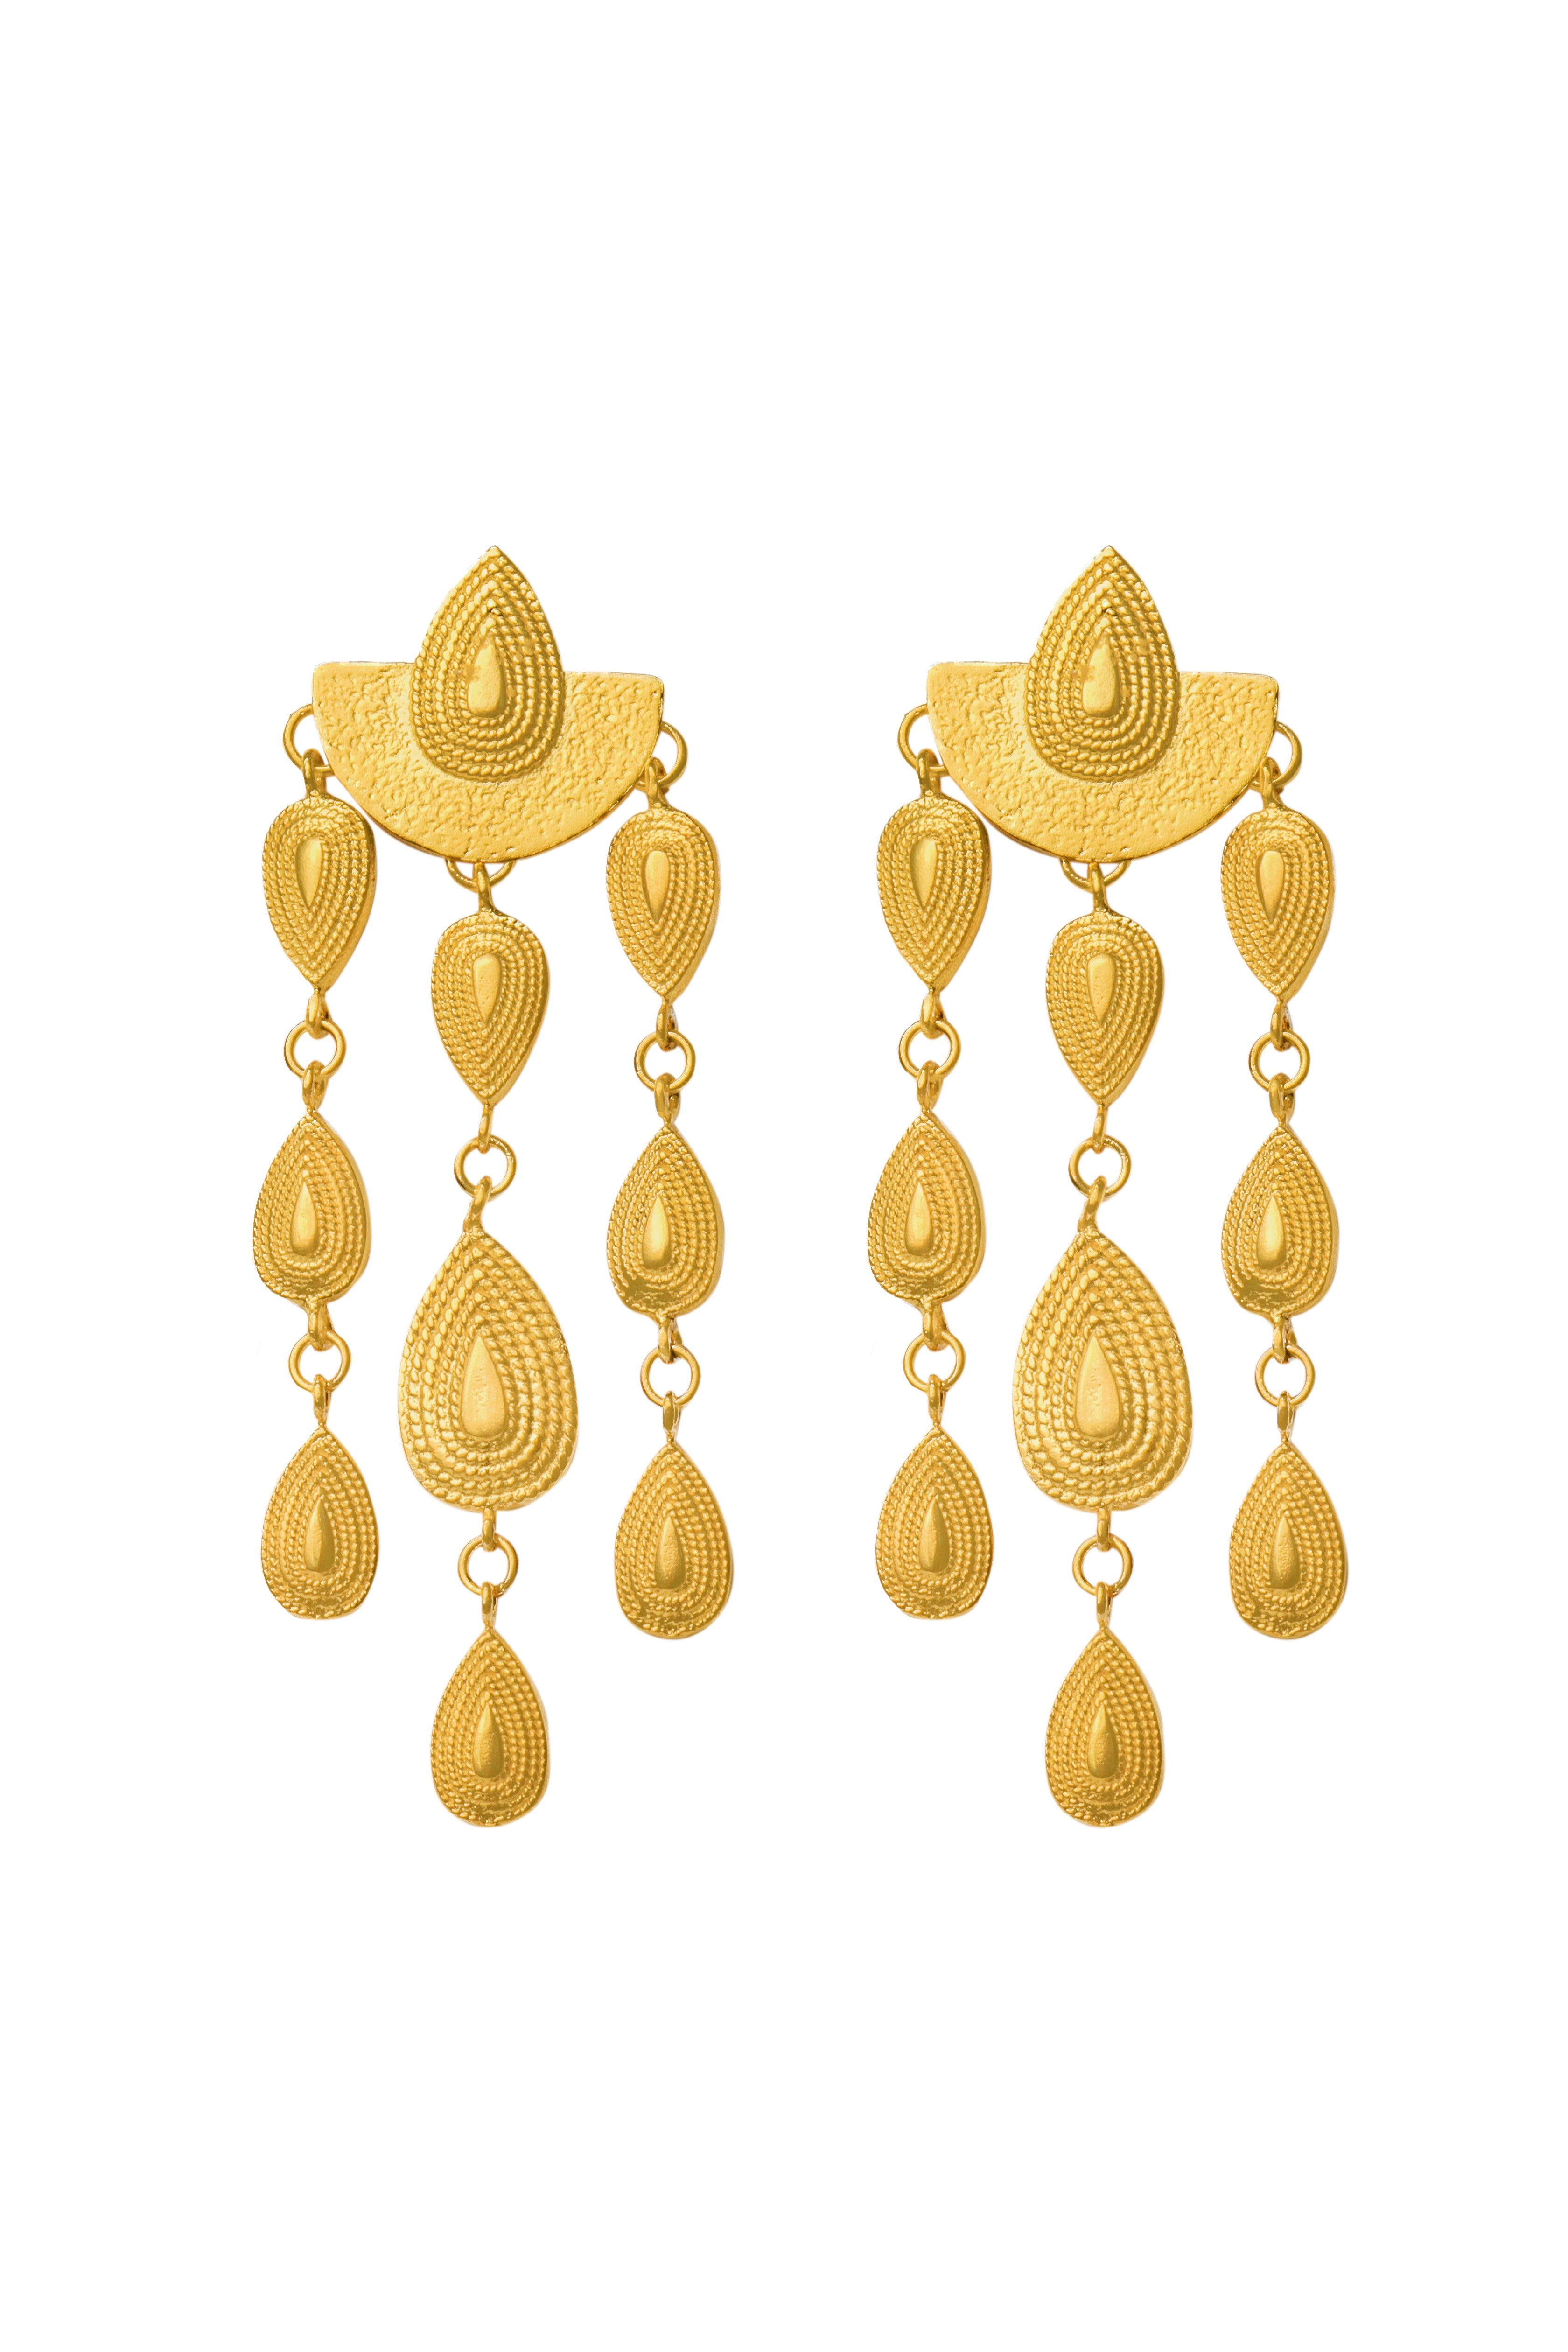 Bianca earrings by Pearl Martini